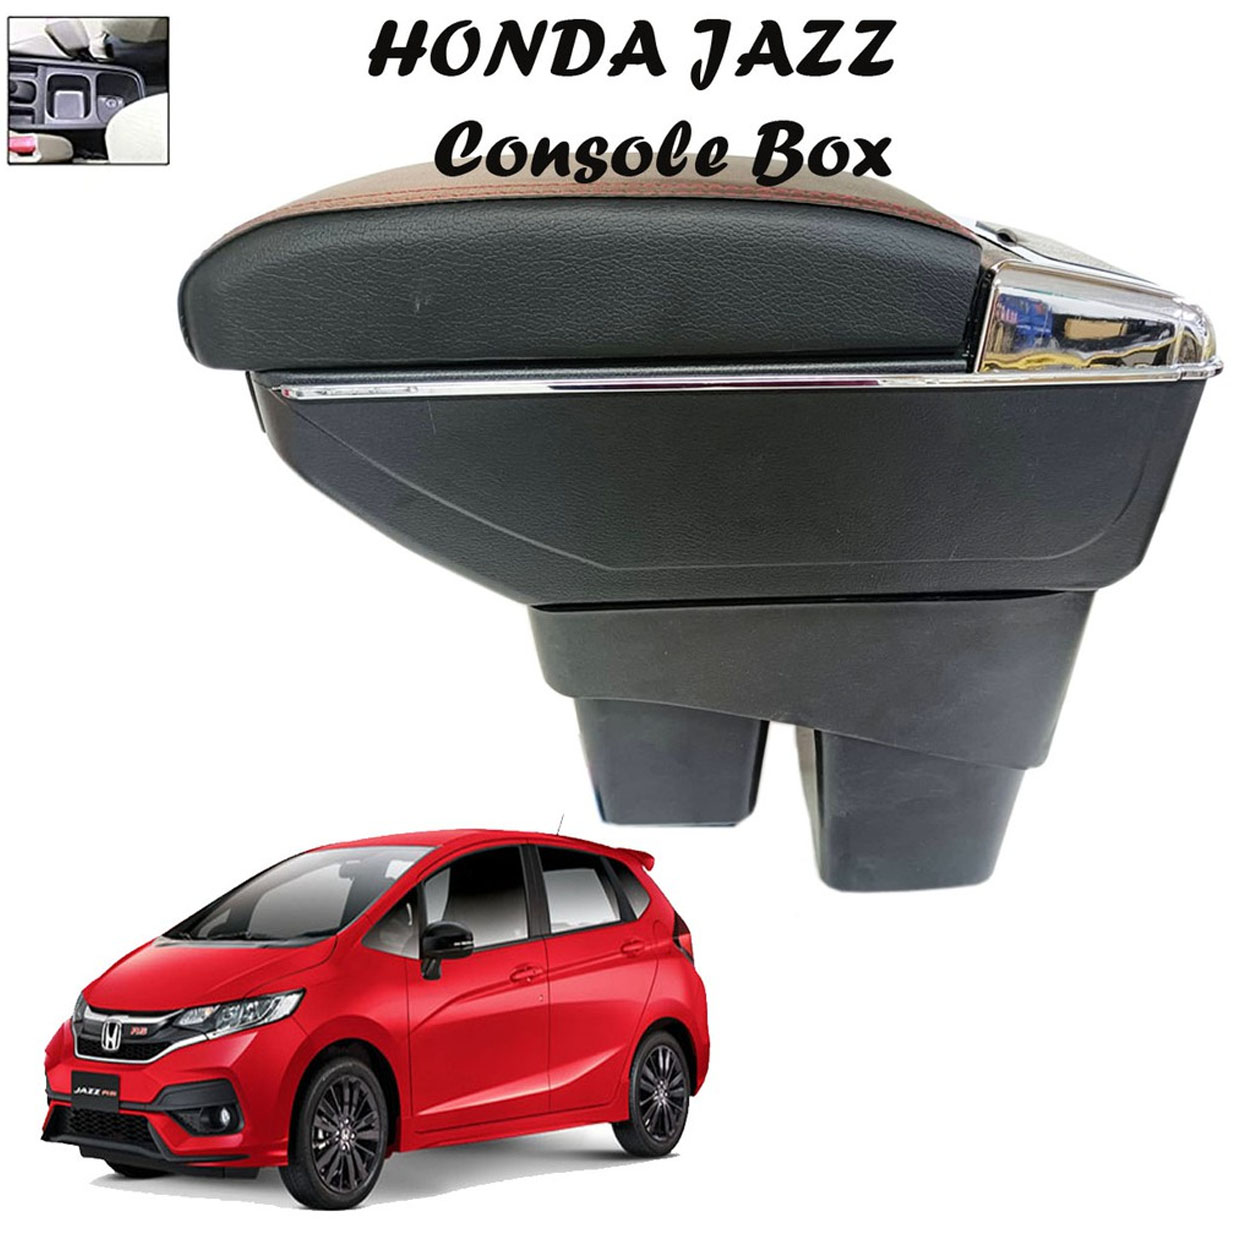 Honda Fit Jazz 2016 tablet holder by csm4981 3d model